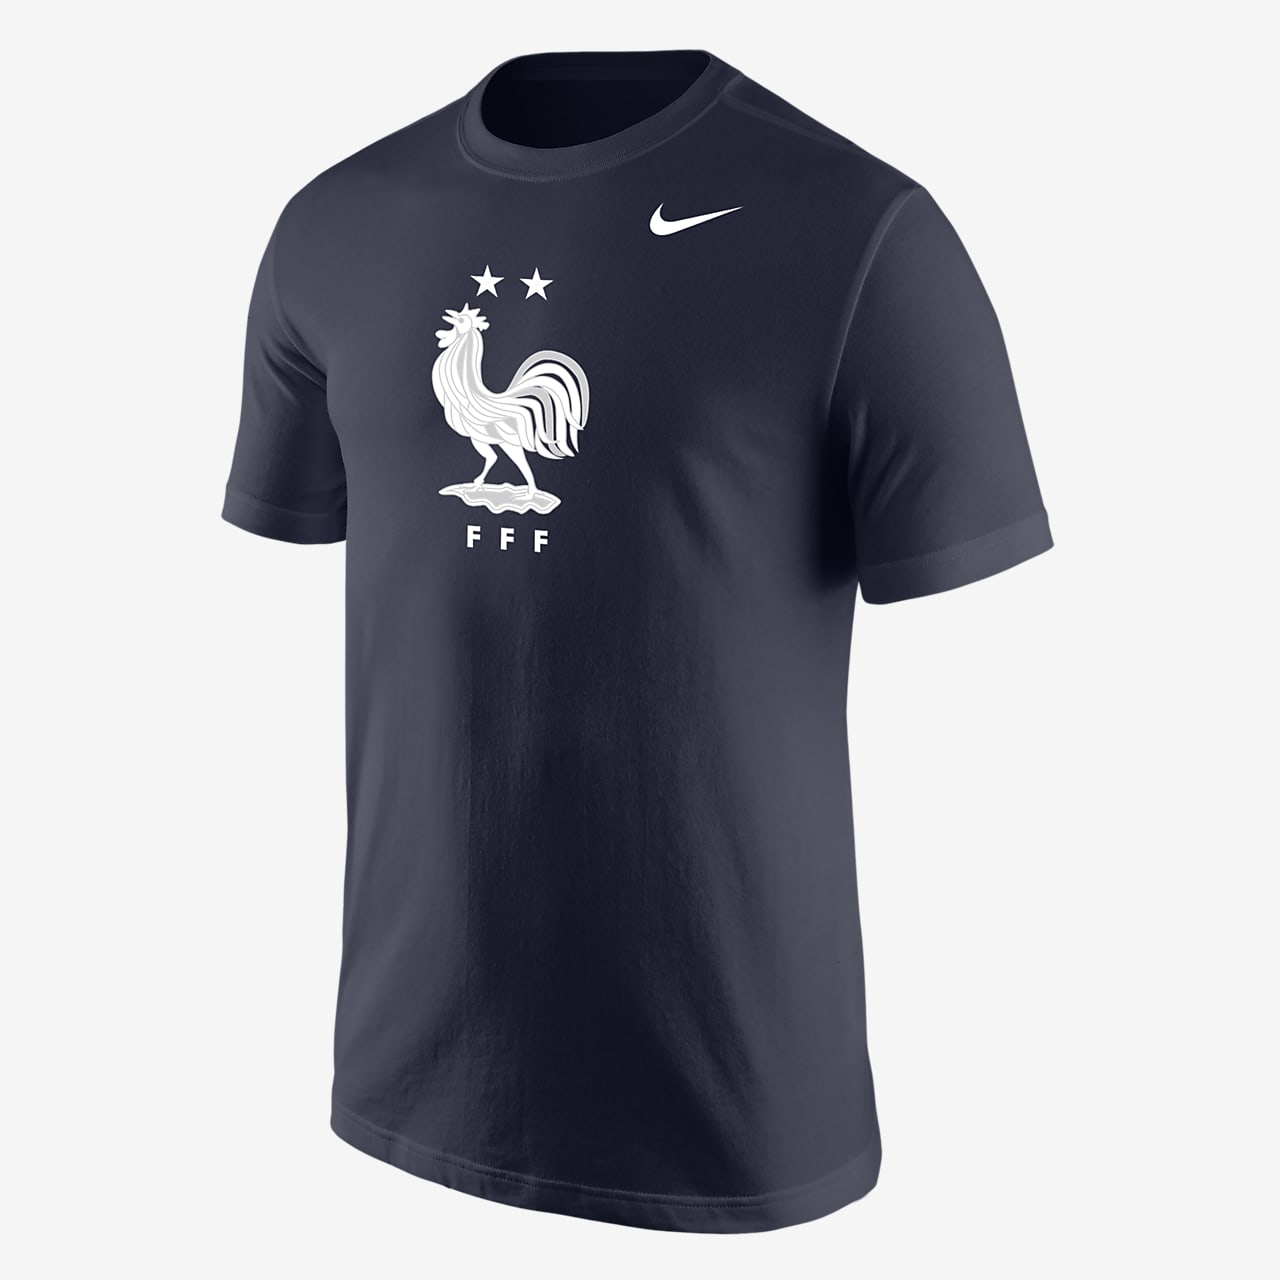 lugt Har lært krans FFF Men's Nike Core T-Shirt. Nike.com